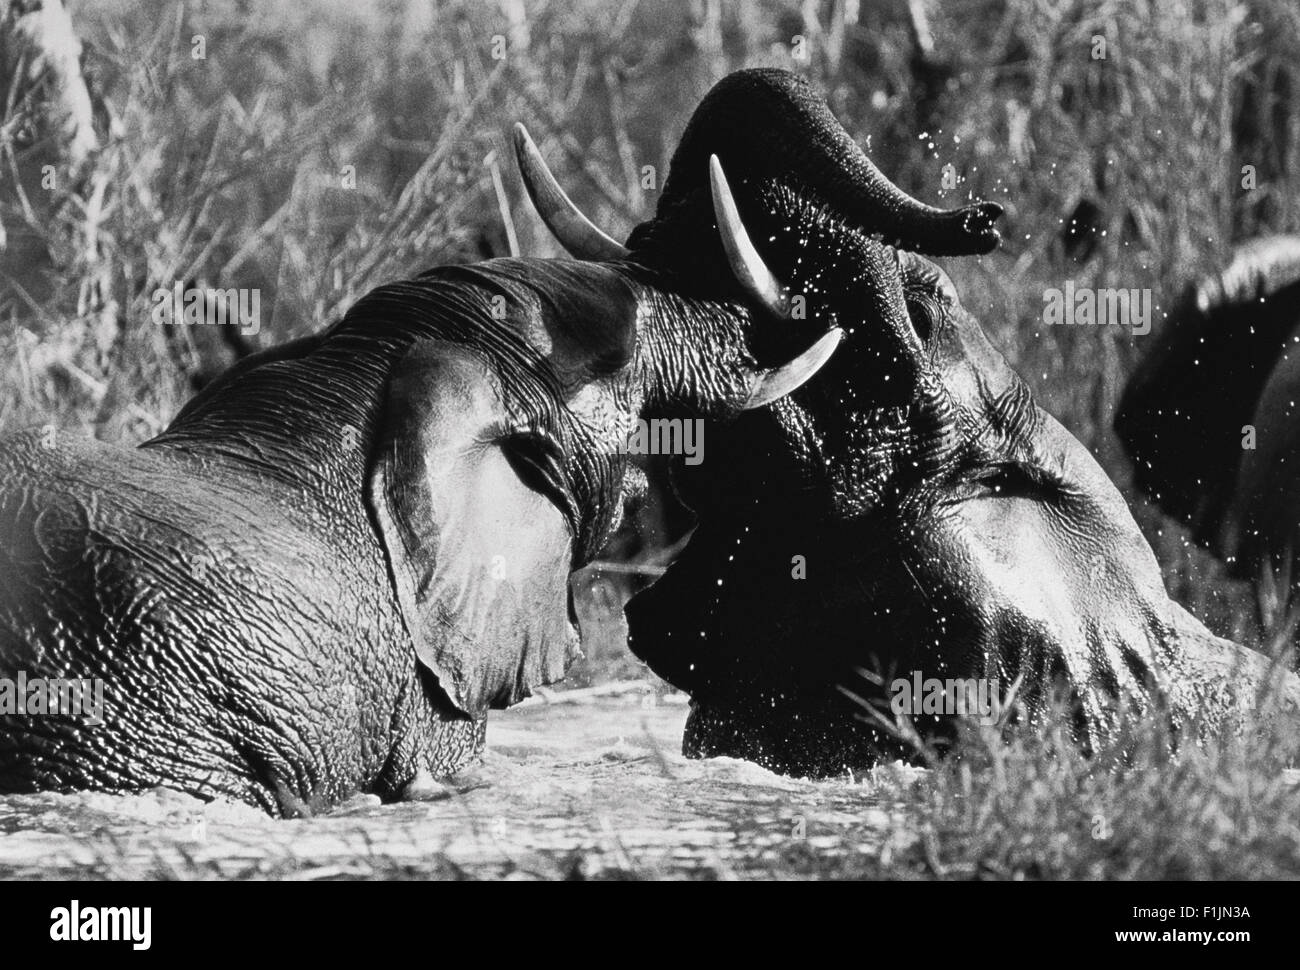 Elephants Fighting in River Stock Photo